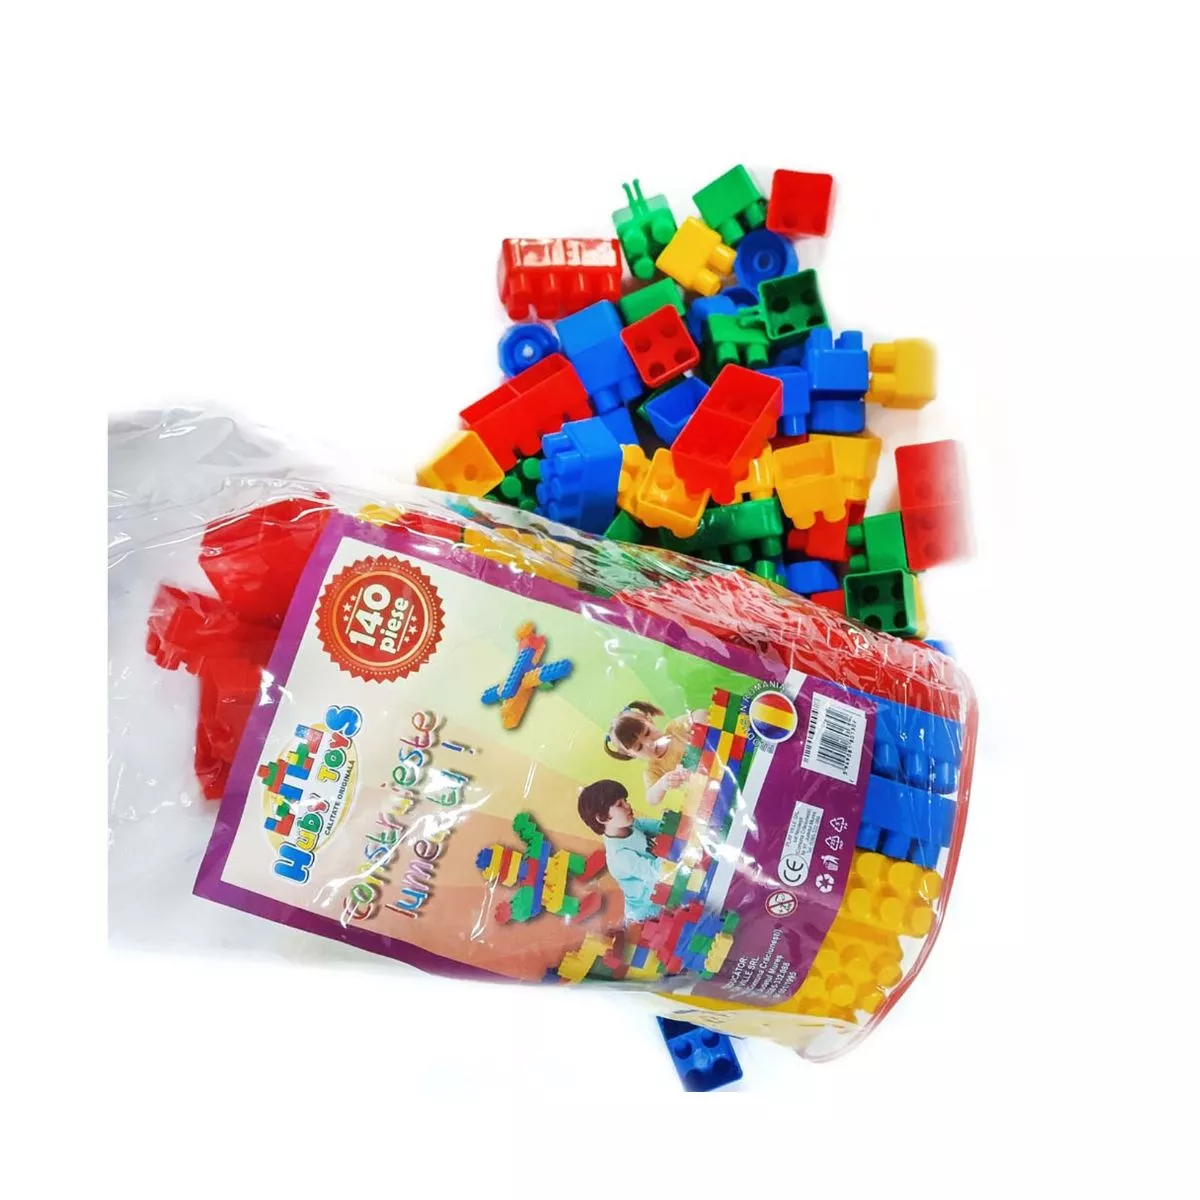 Cuburi de constructie din plastic, multicolore, in saculet, 140 piese HT 1042 2